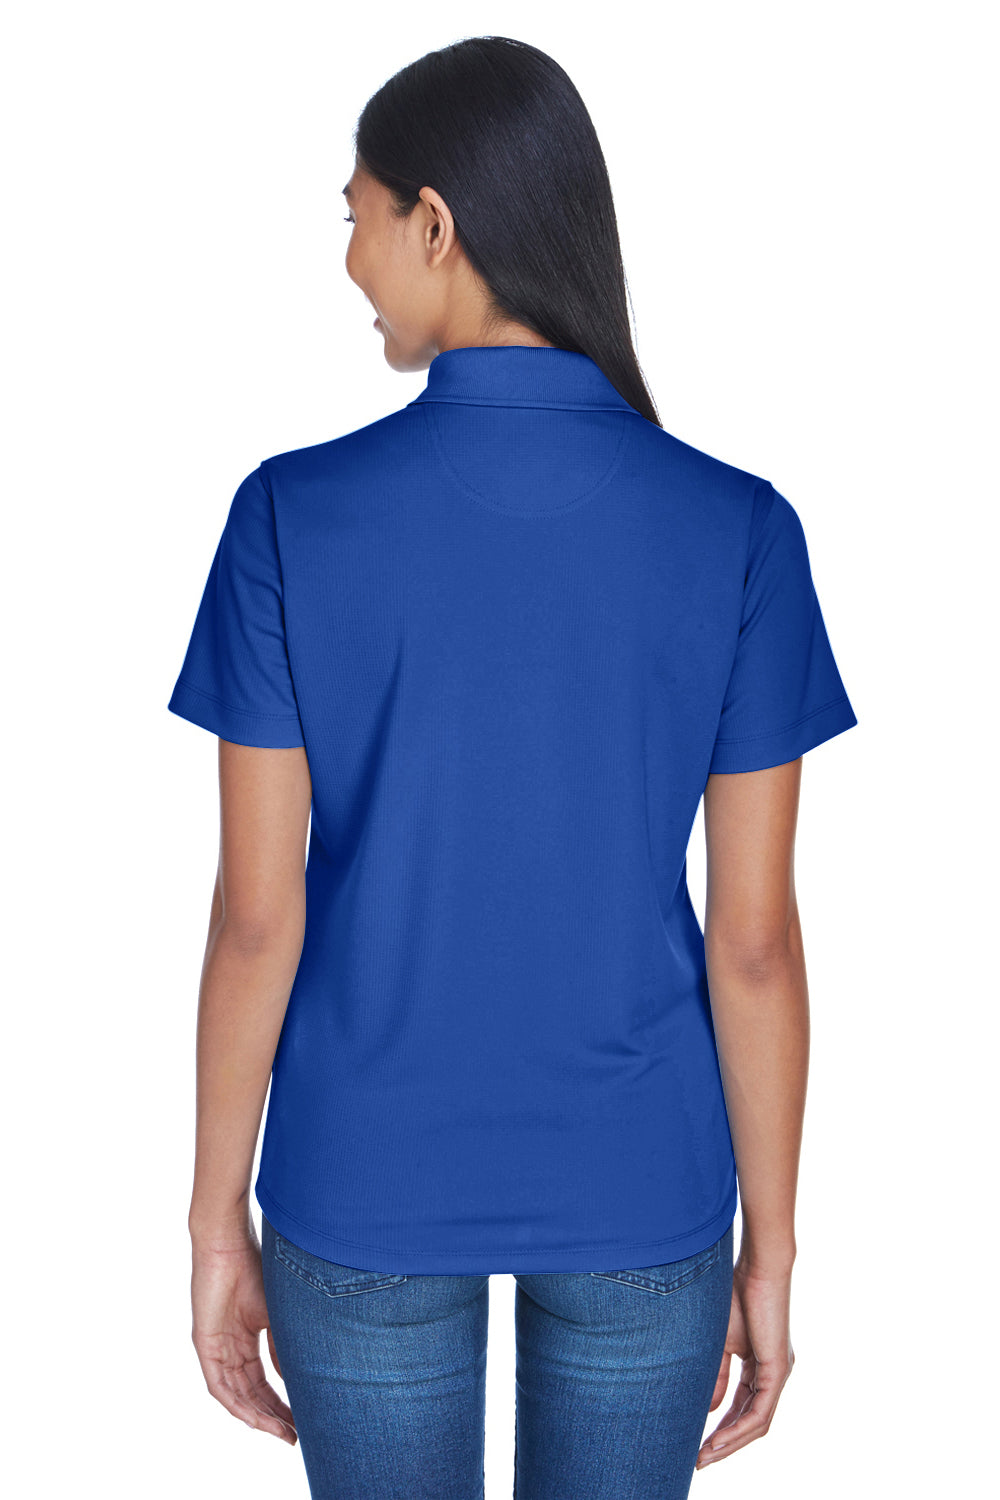 UltraClub 8445L Womens Cool & Dry Performance Moisture Wicking Short Sleeve Polo Shirt Cobalt Blue Back